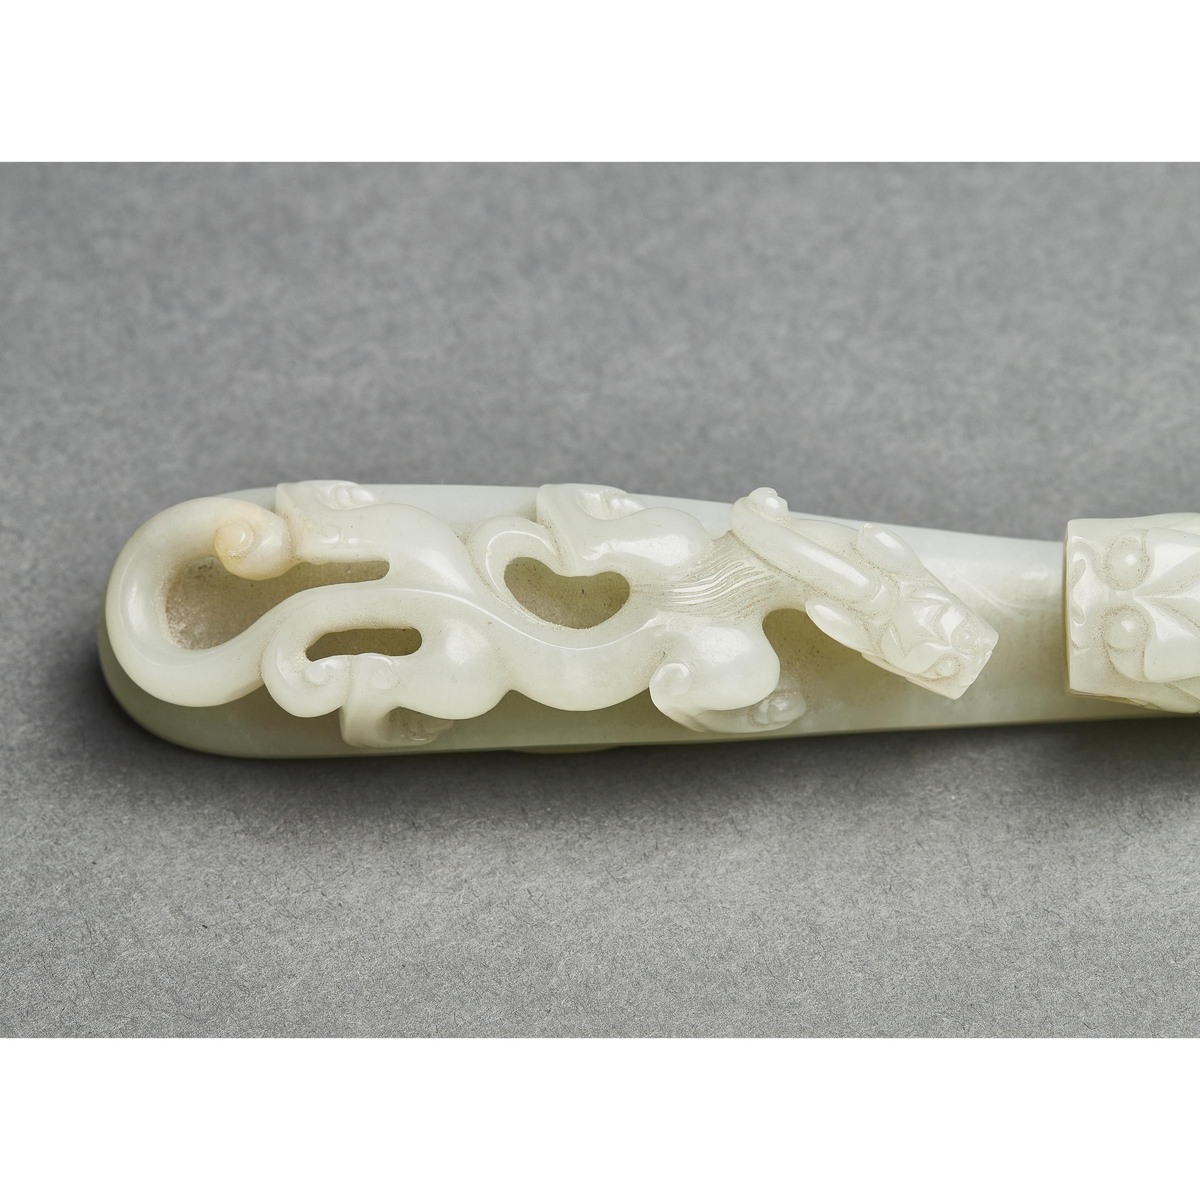 A Pale Celadon Jade 'Dragon' Belt Hook, Qing Dynasty, 清 青白玉雕'苍龙教子'带扣, length 5 in — 12.8 cm - Image 4 of 8